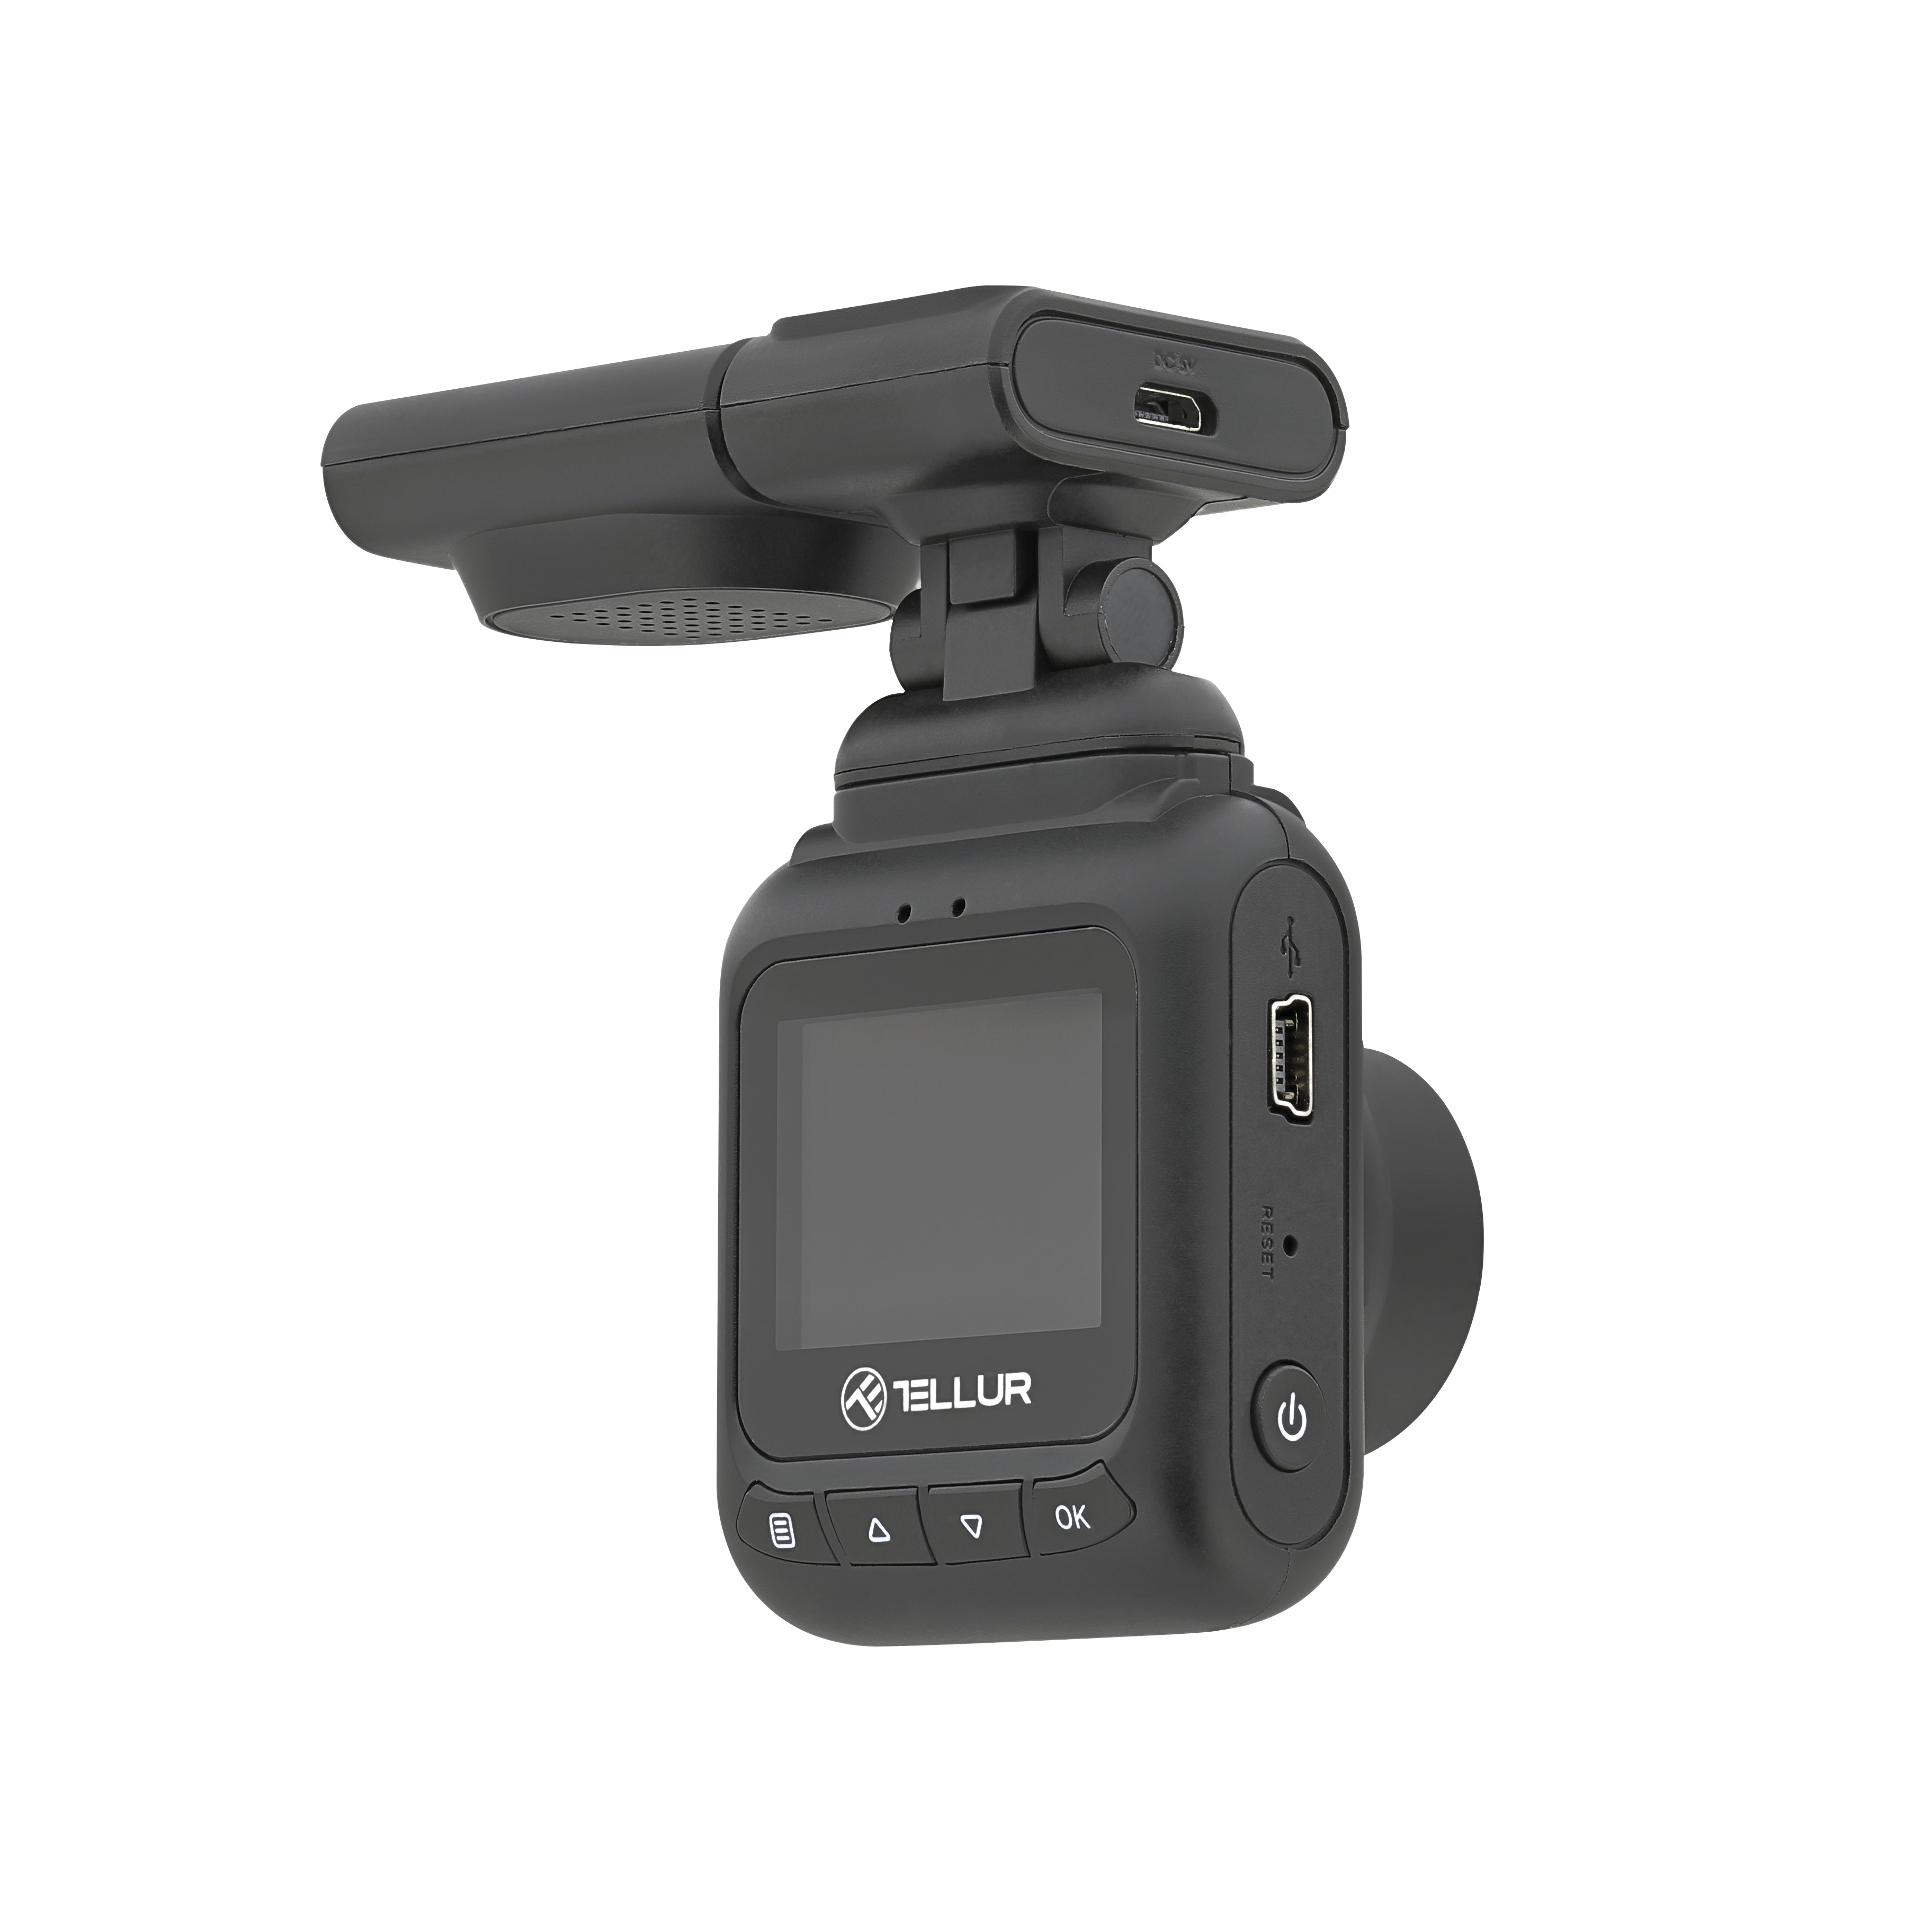 Dash-Patrouille GPS 1080P, TELLUR Display DC2, Dashcam FullHD,